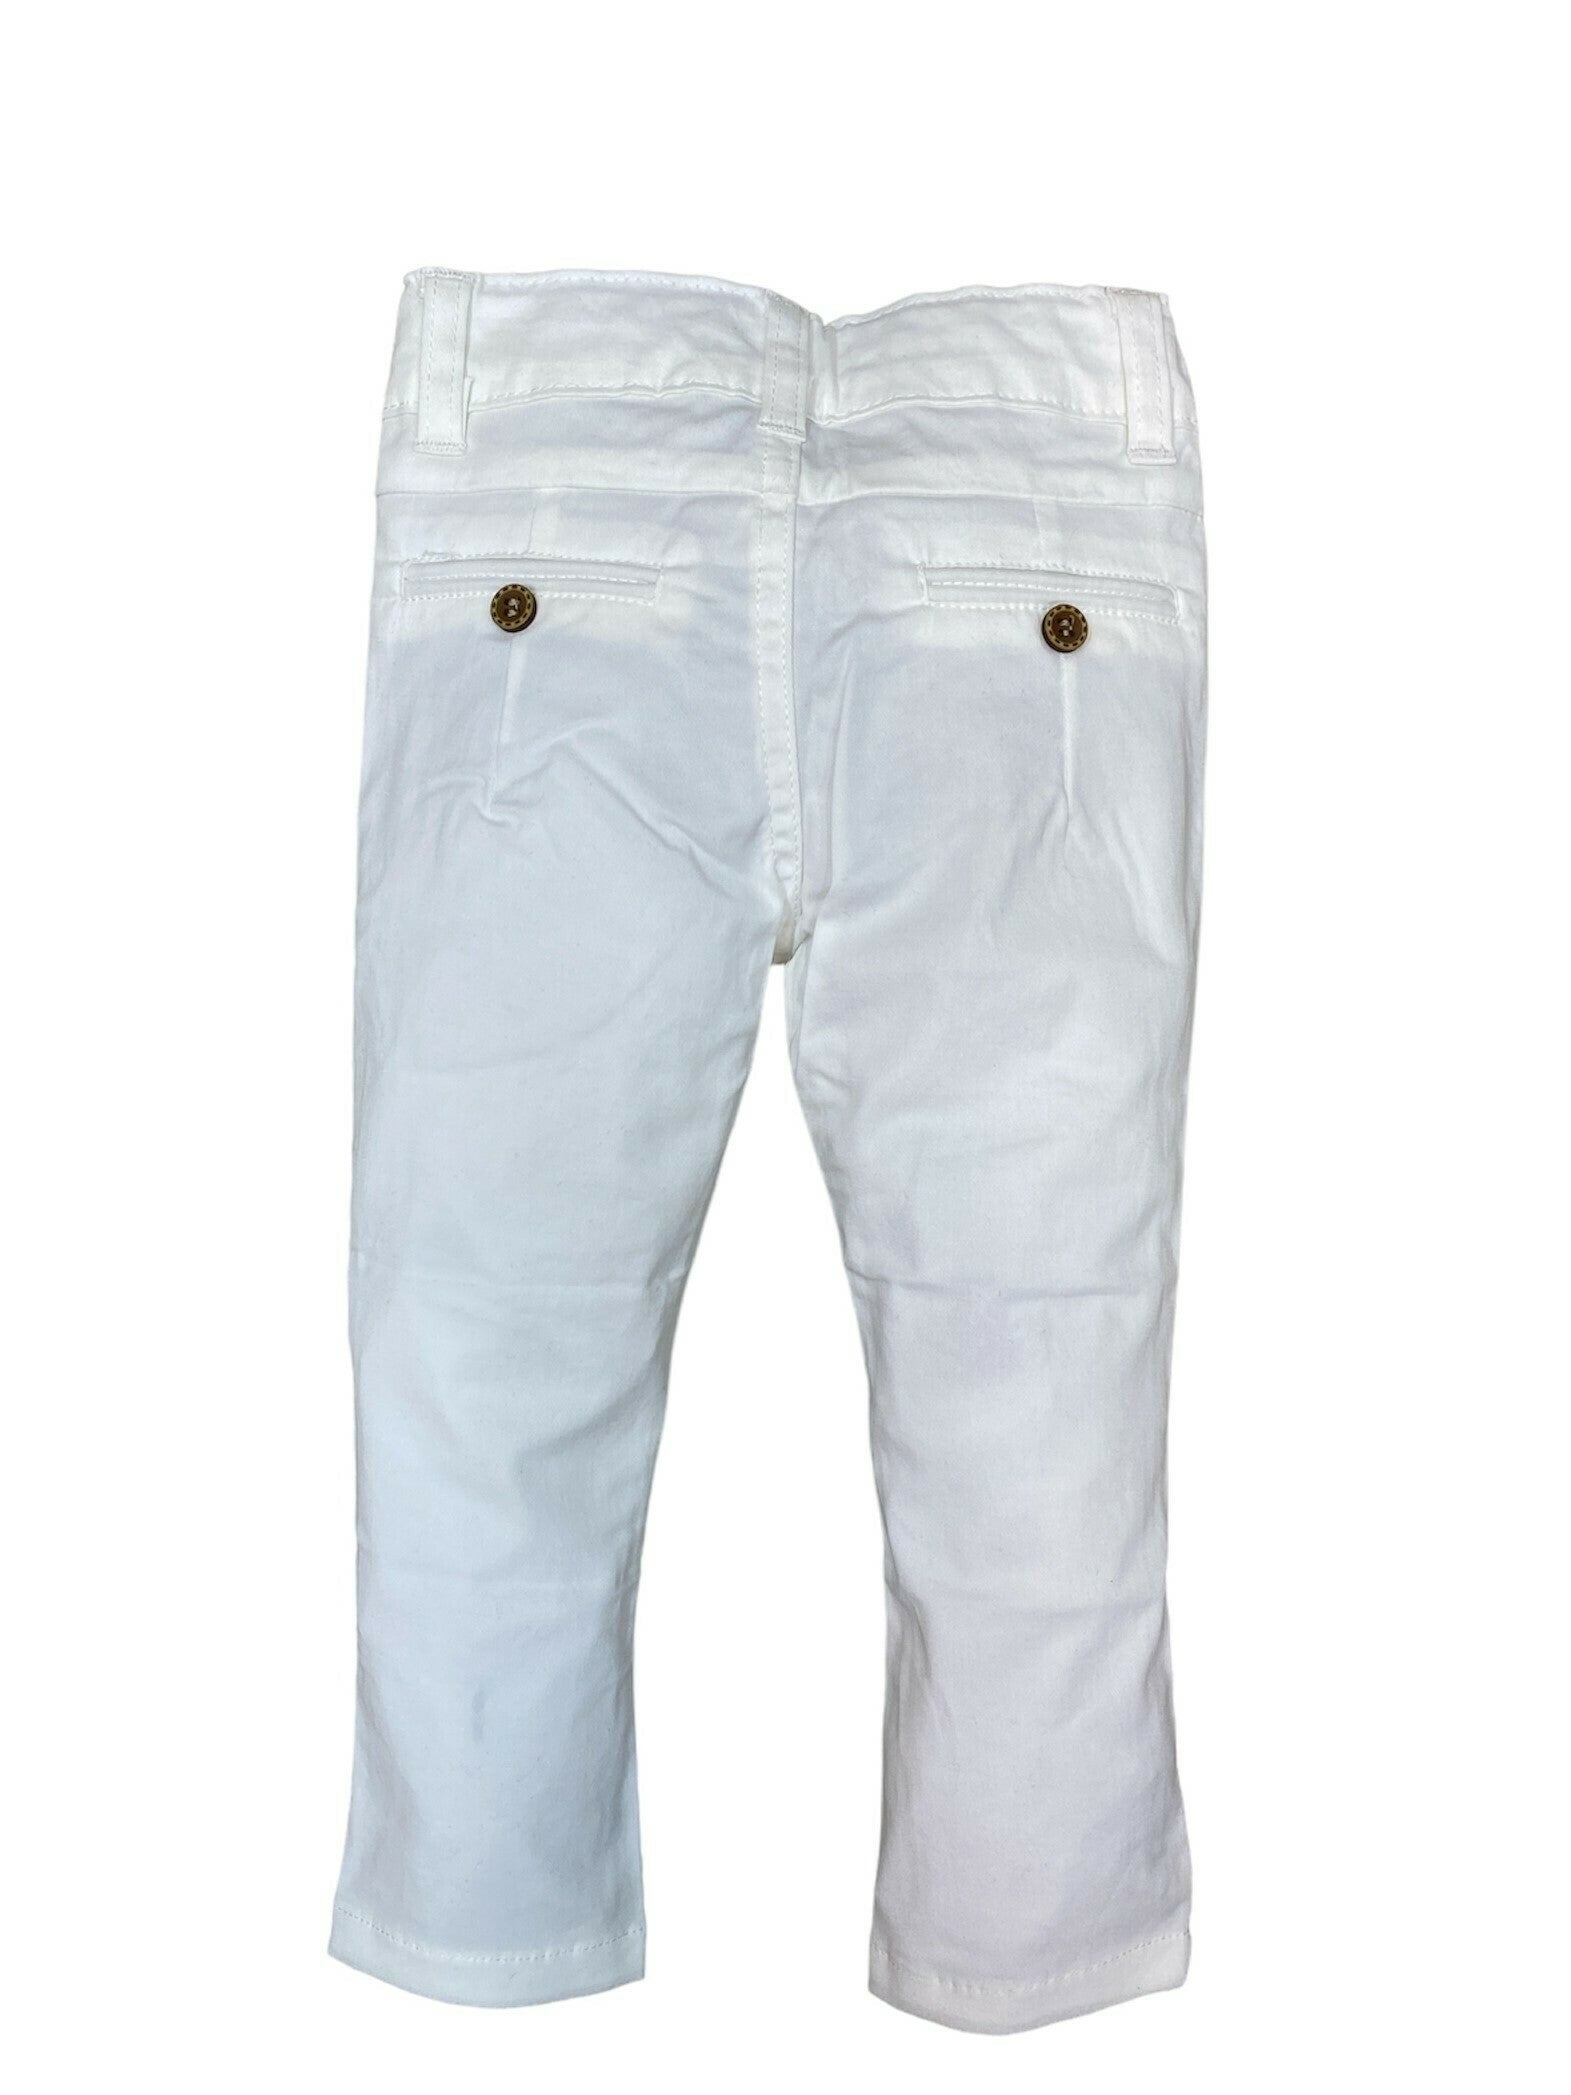 Cotton Pant Adjustable White